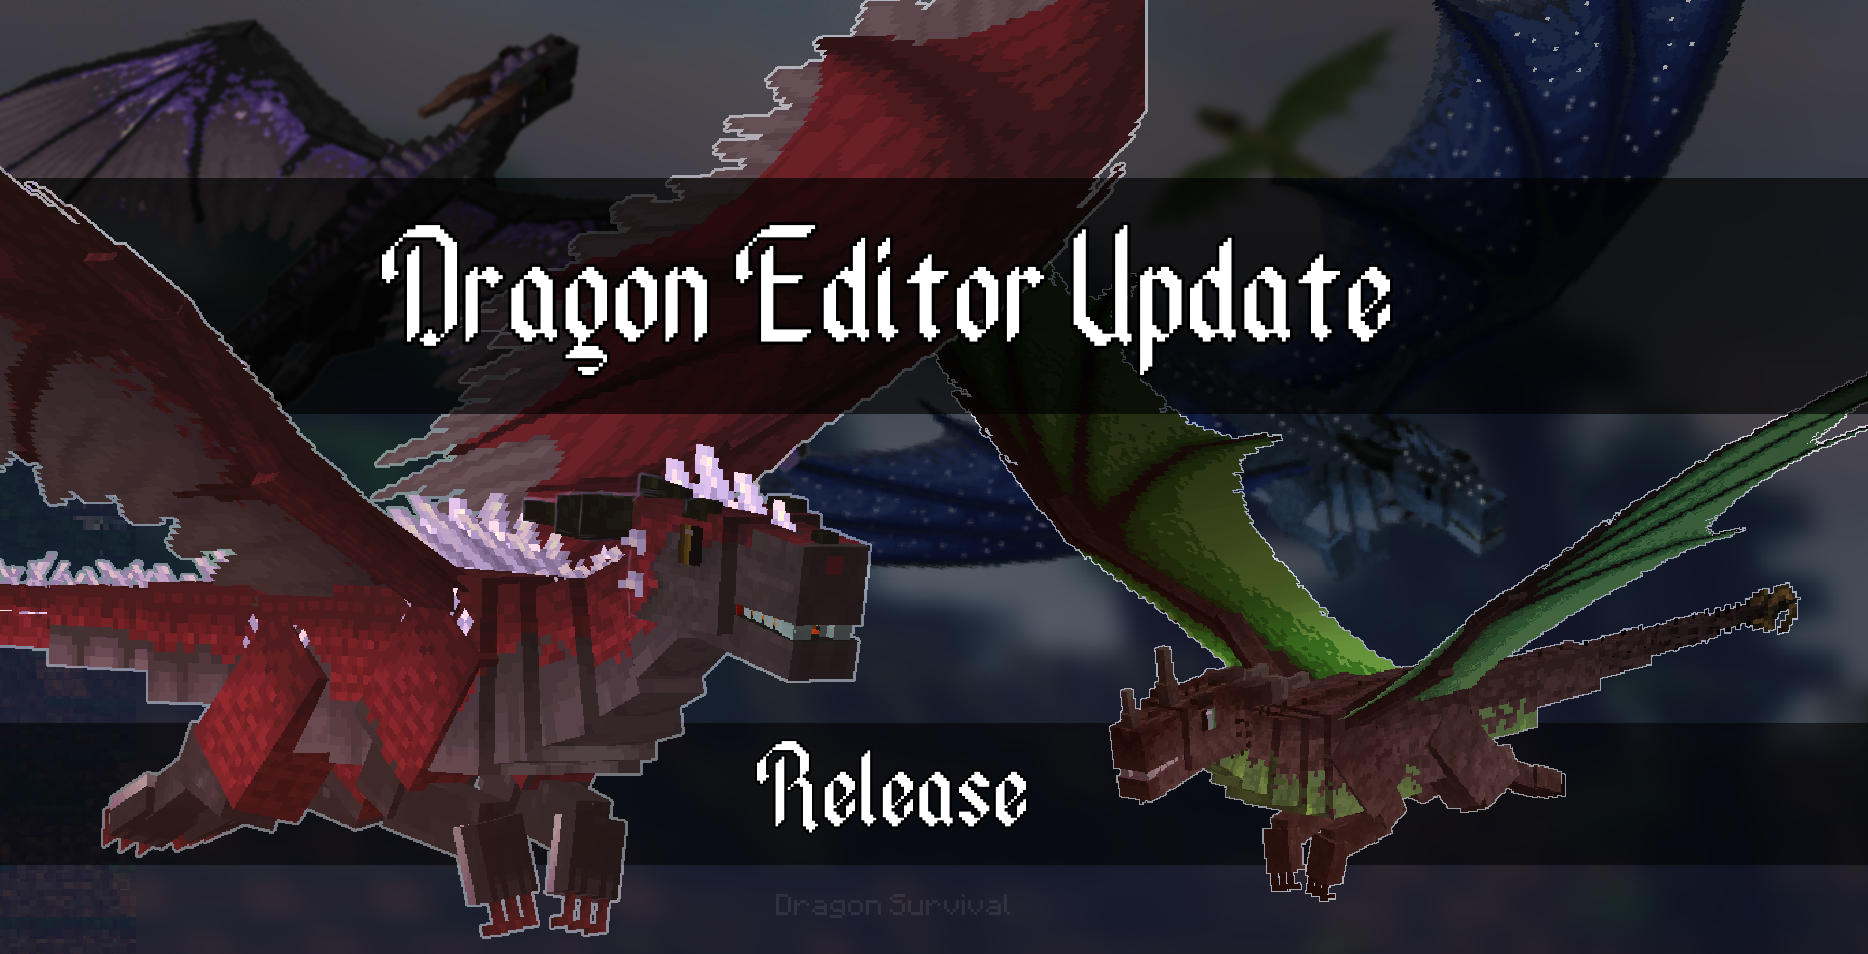 Dragon Editor